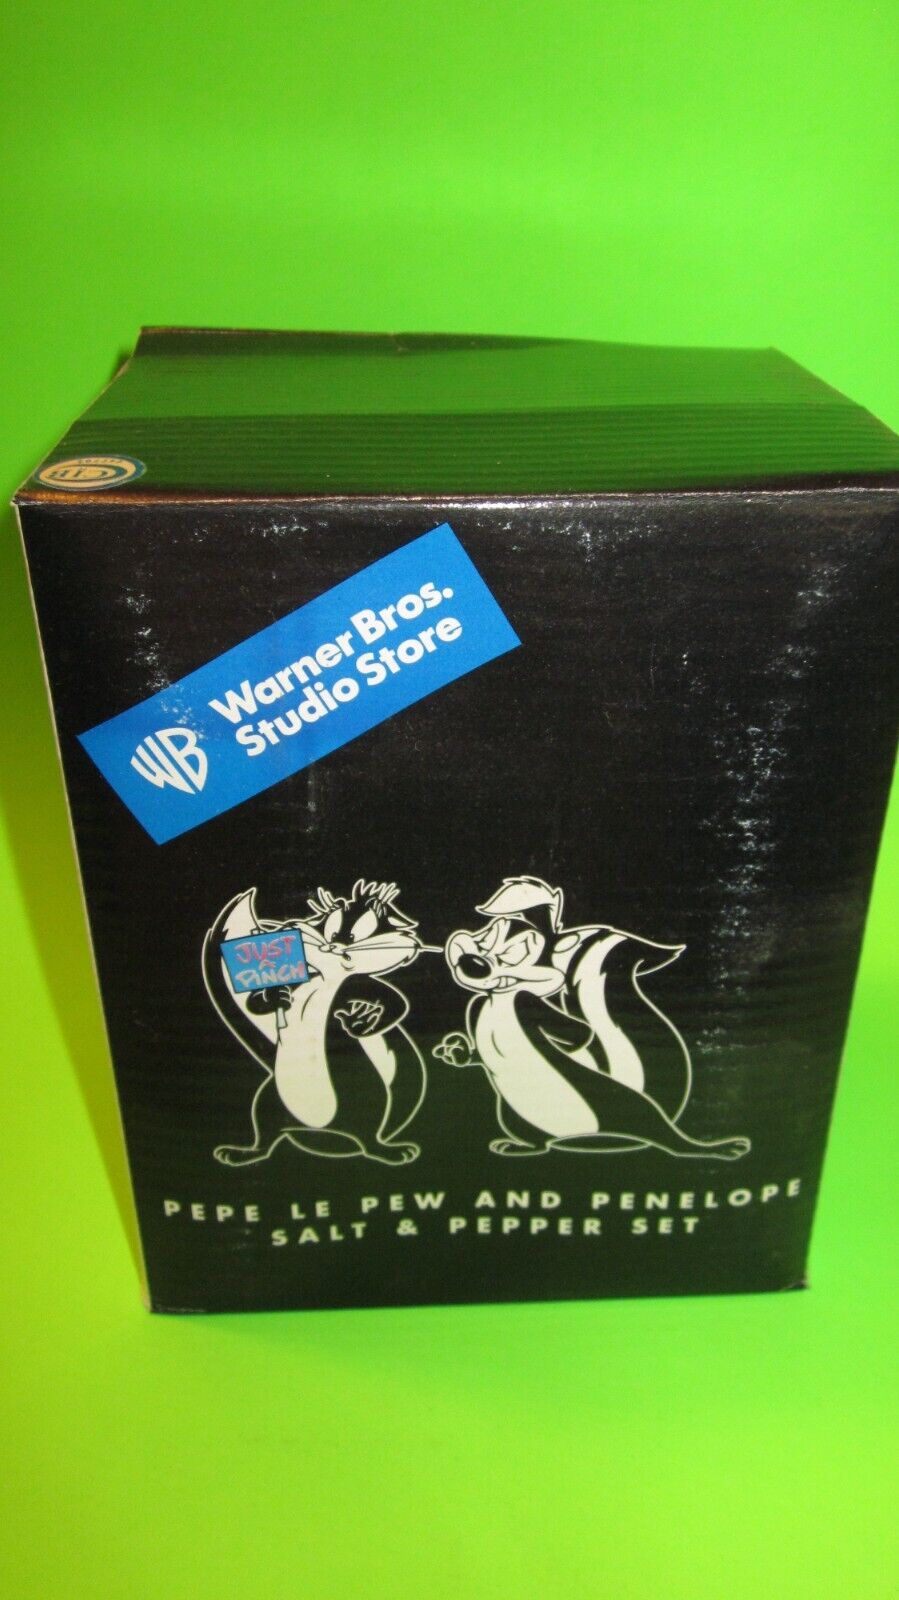 Warner Bros Studio Store Pepe Le Pew Penelope Salt & Pepper - New